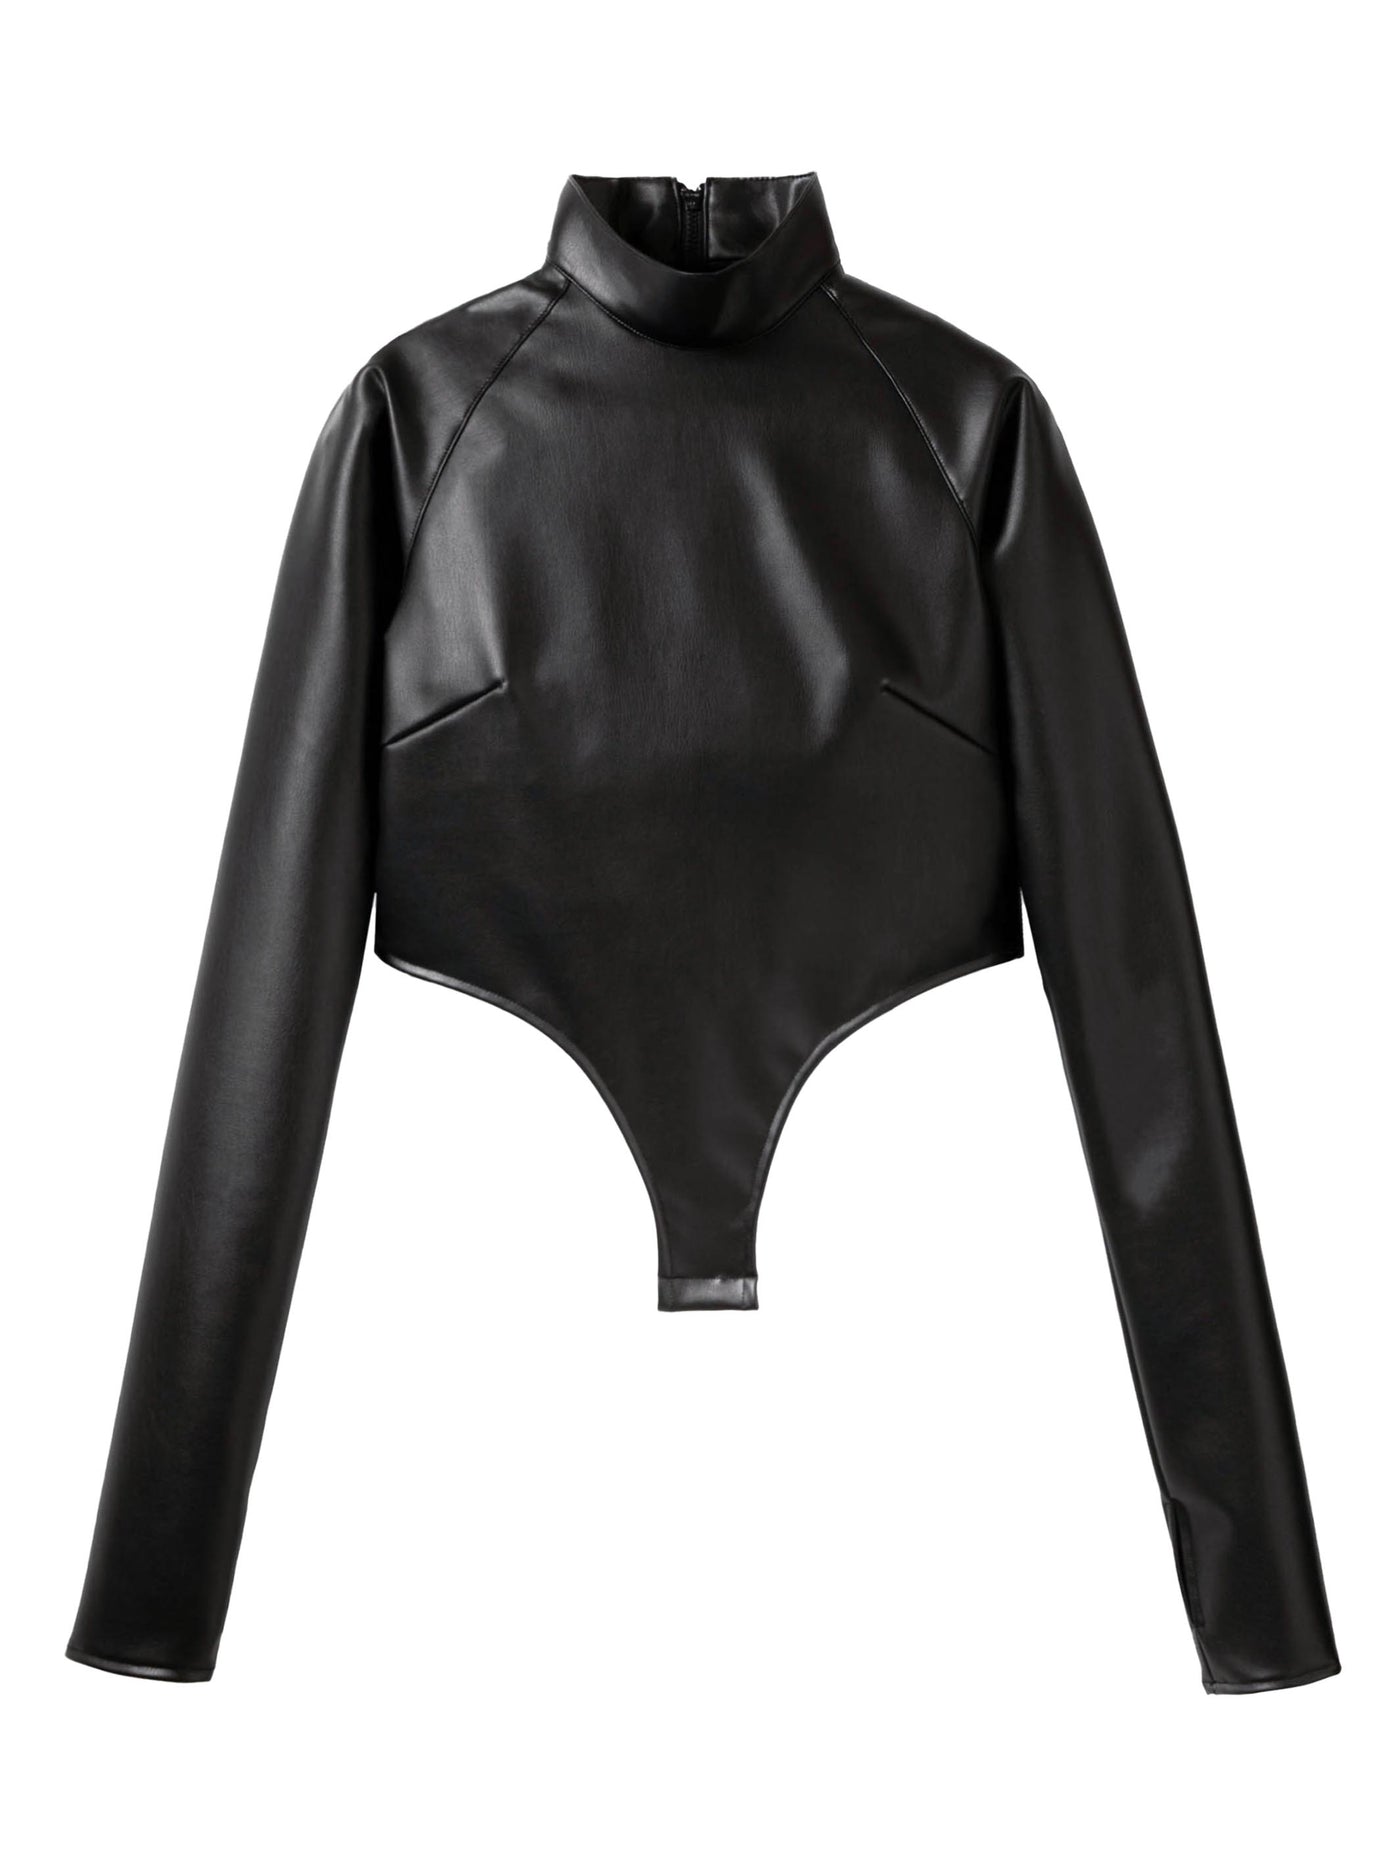 Stretch vegan leather bodysuit hi-neck top